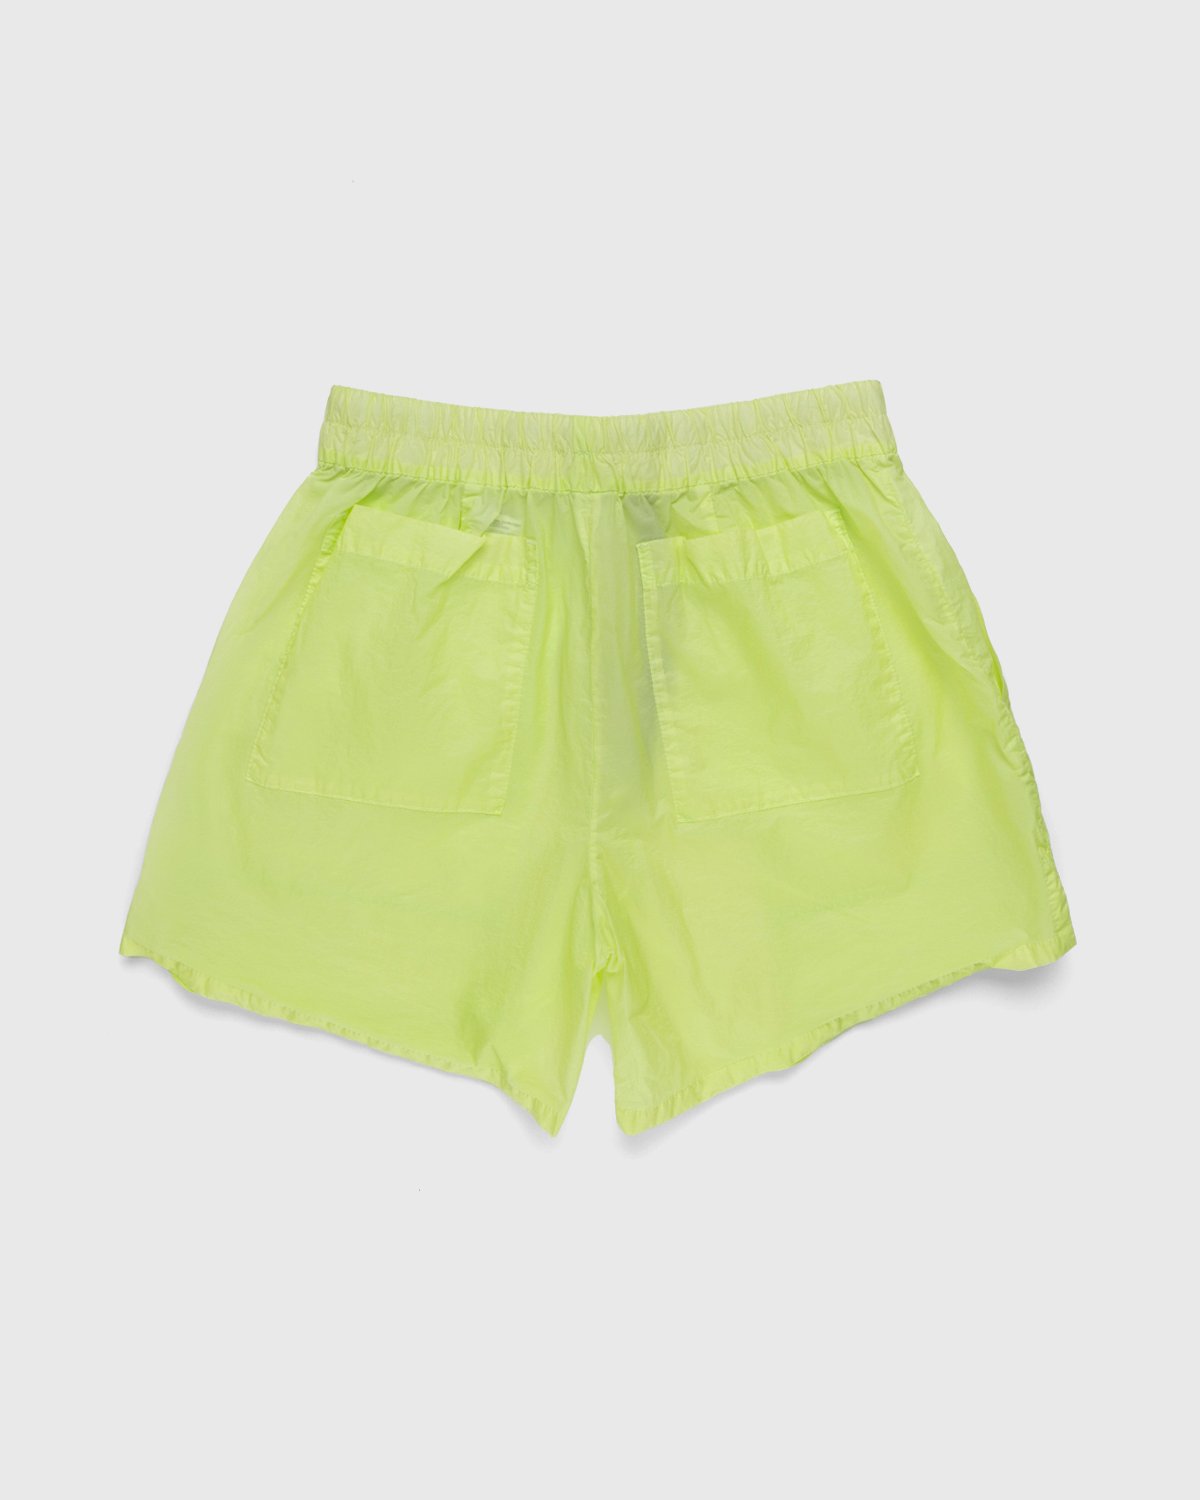 Dries van Noten - Pooles Shorts Lime - Clothing - Green - Image 2